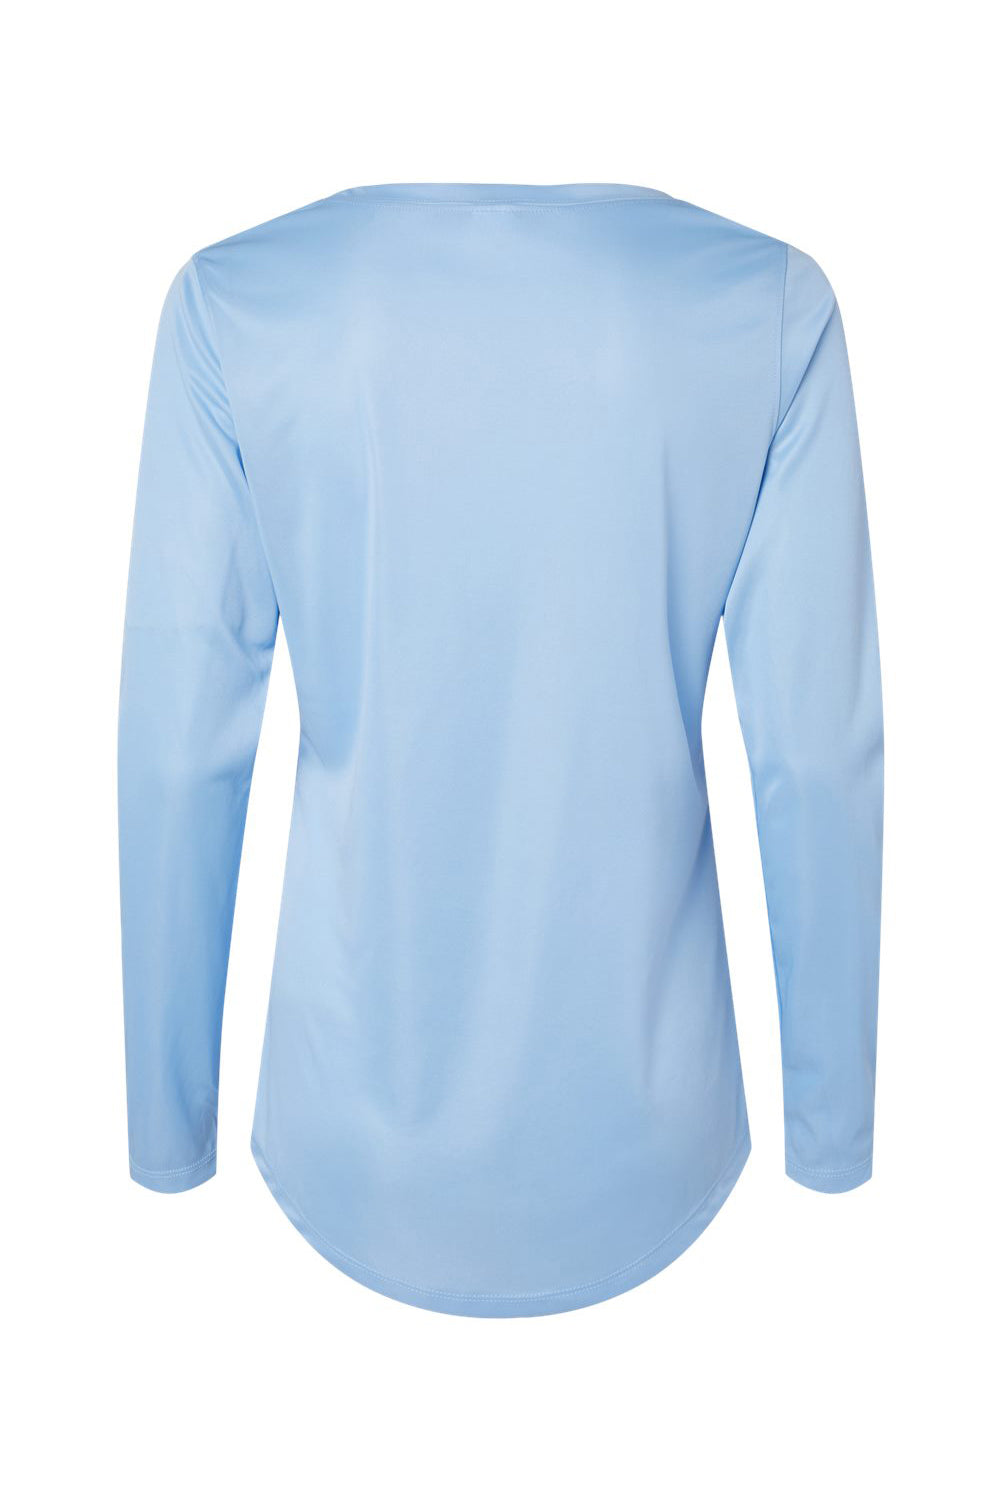 Paragon 214 Womens Islander Performance Long Sleeve Scoop Neck T-Shirt Blue Mist Flat Back